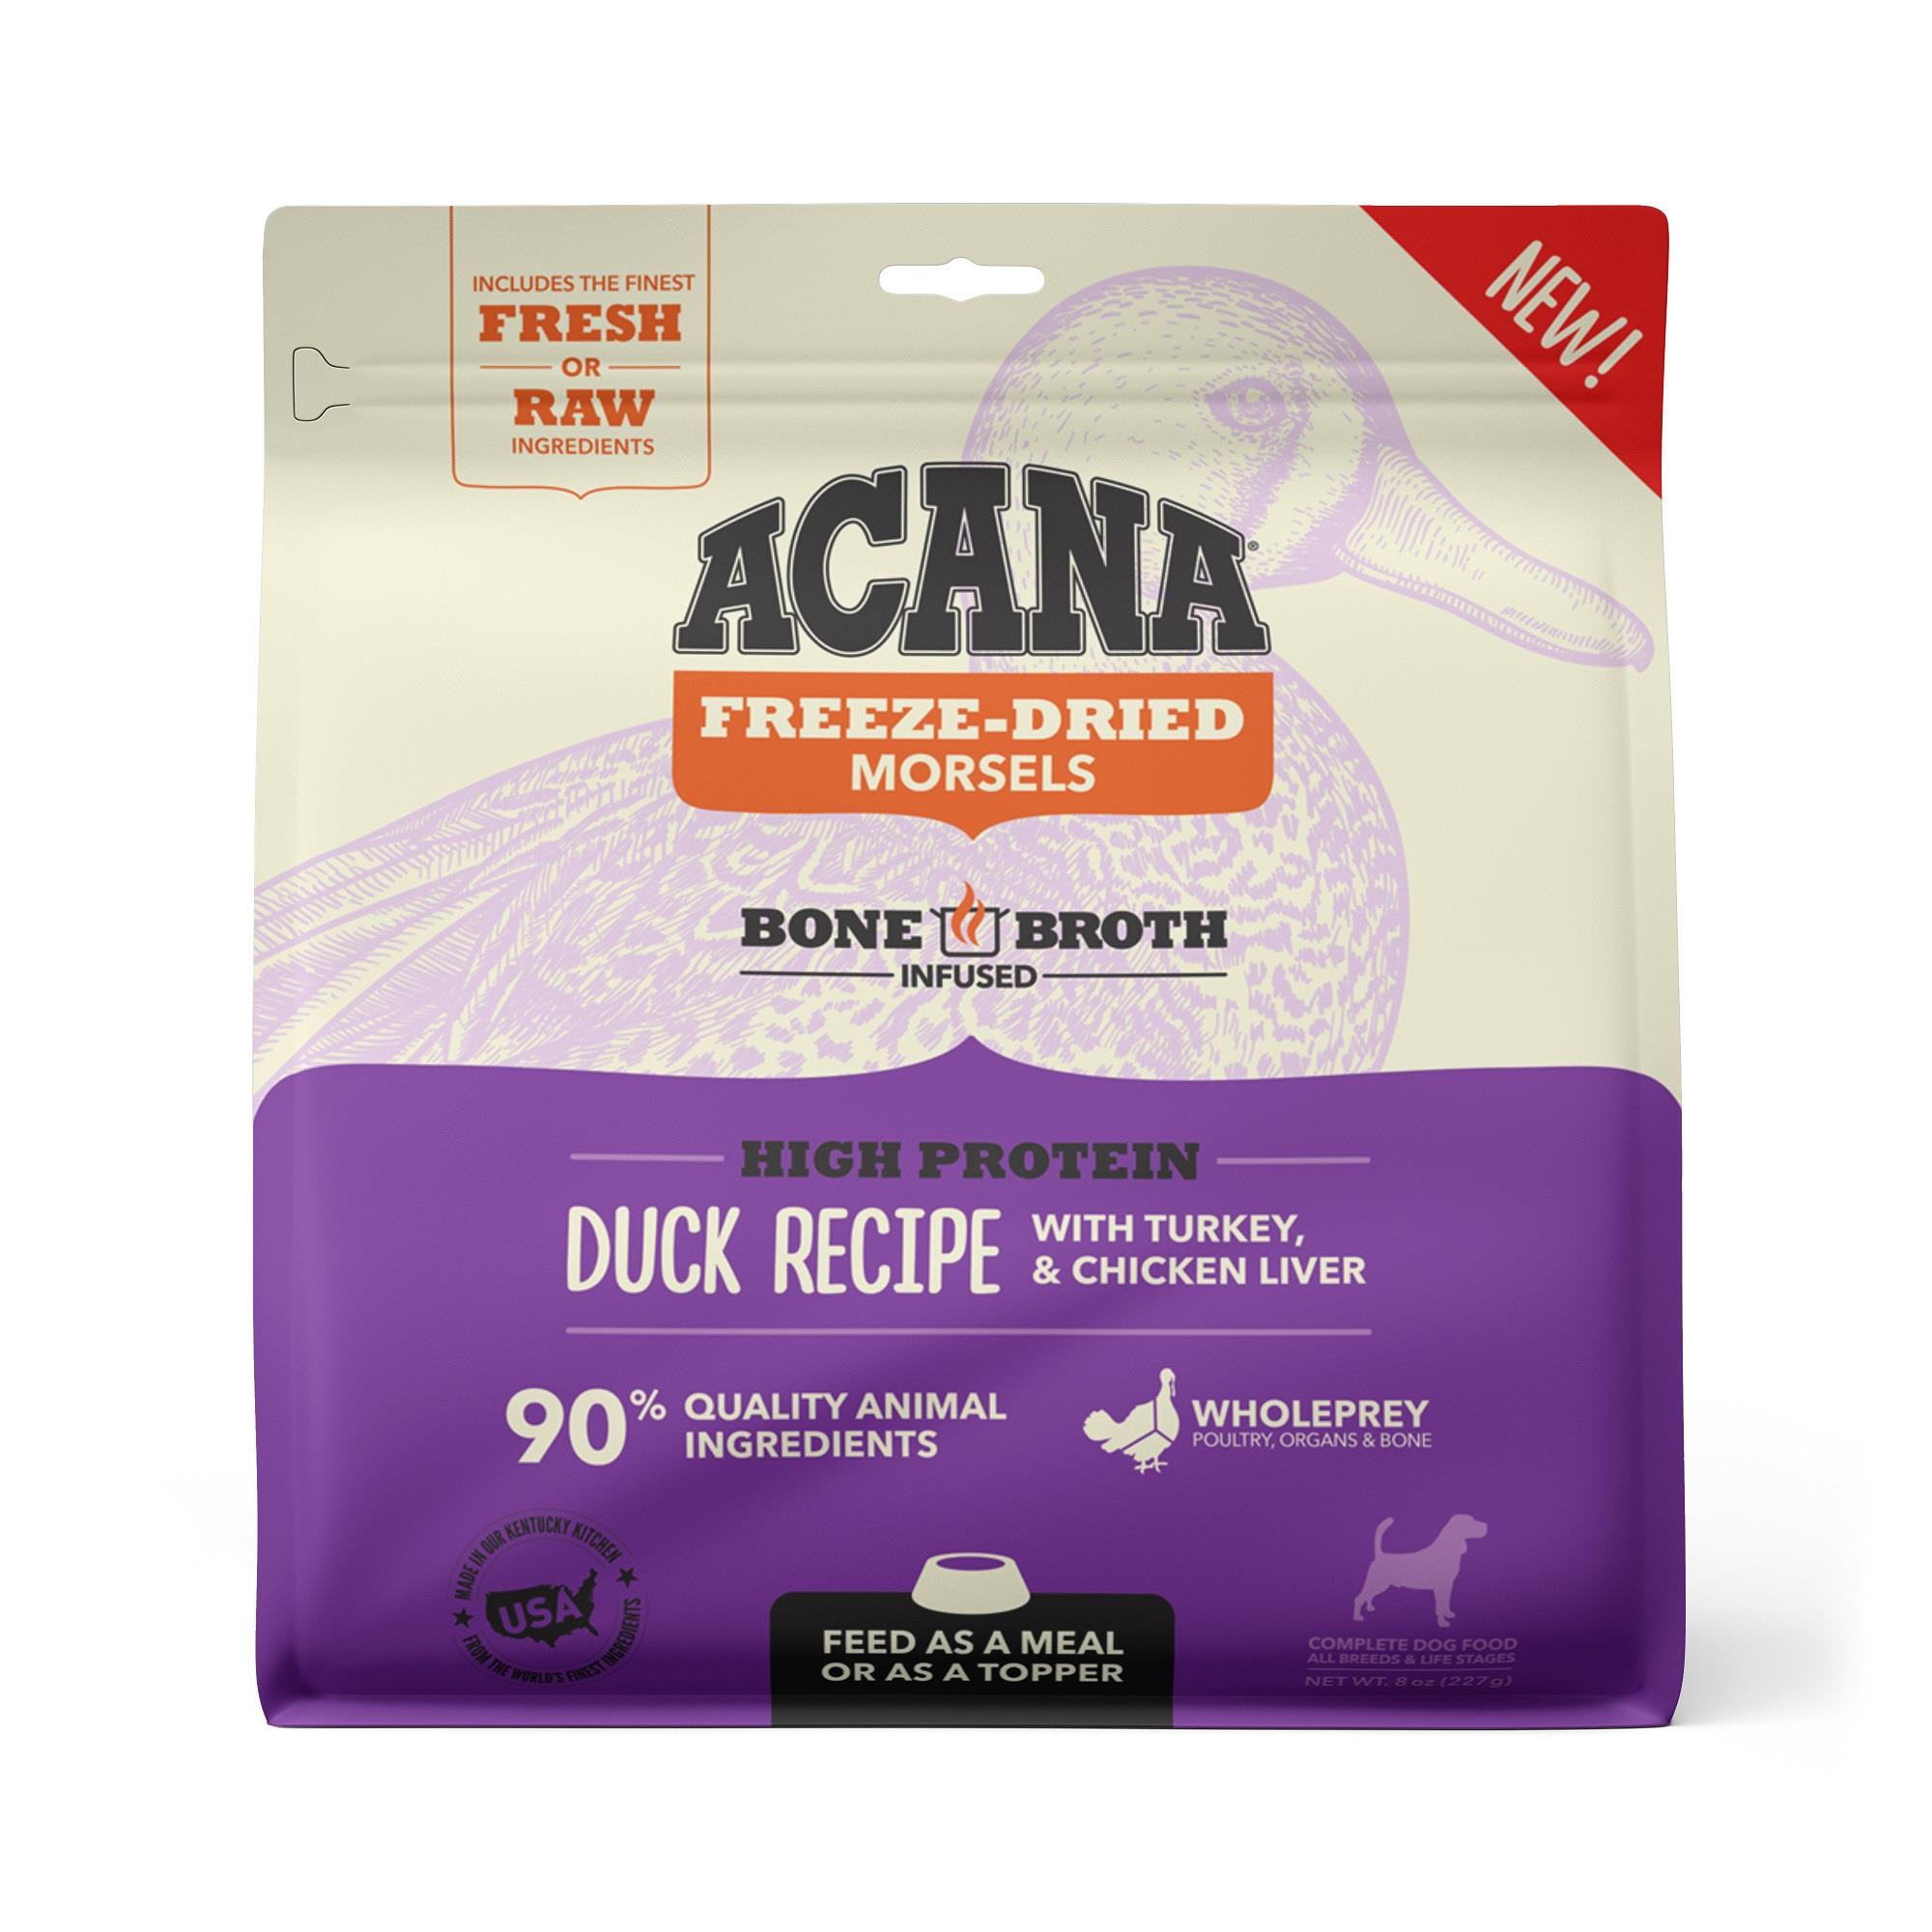 ACANA Grain Free High Protein Fresh & Raw Animal Ingredients Duck Recipe Freeze Dried Morsels Dog Food, 8 oz.